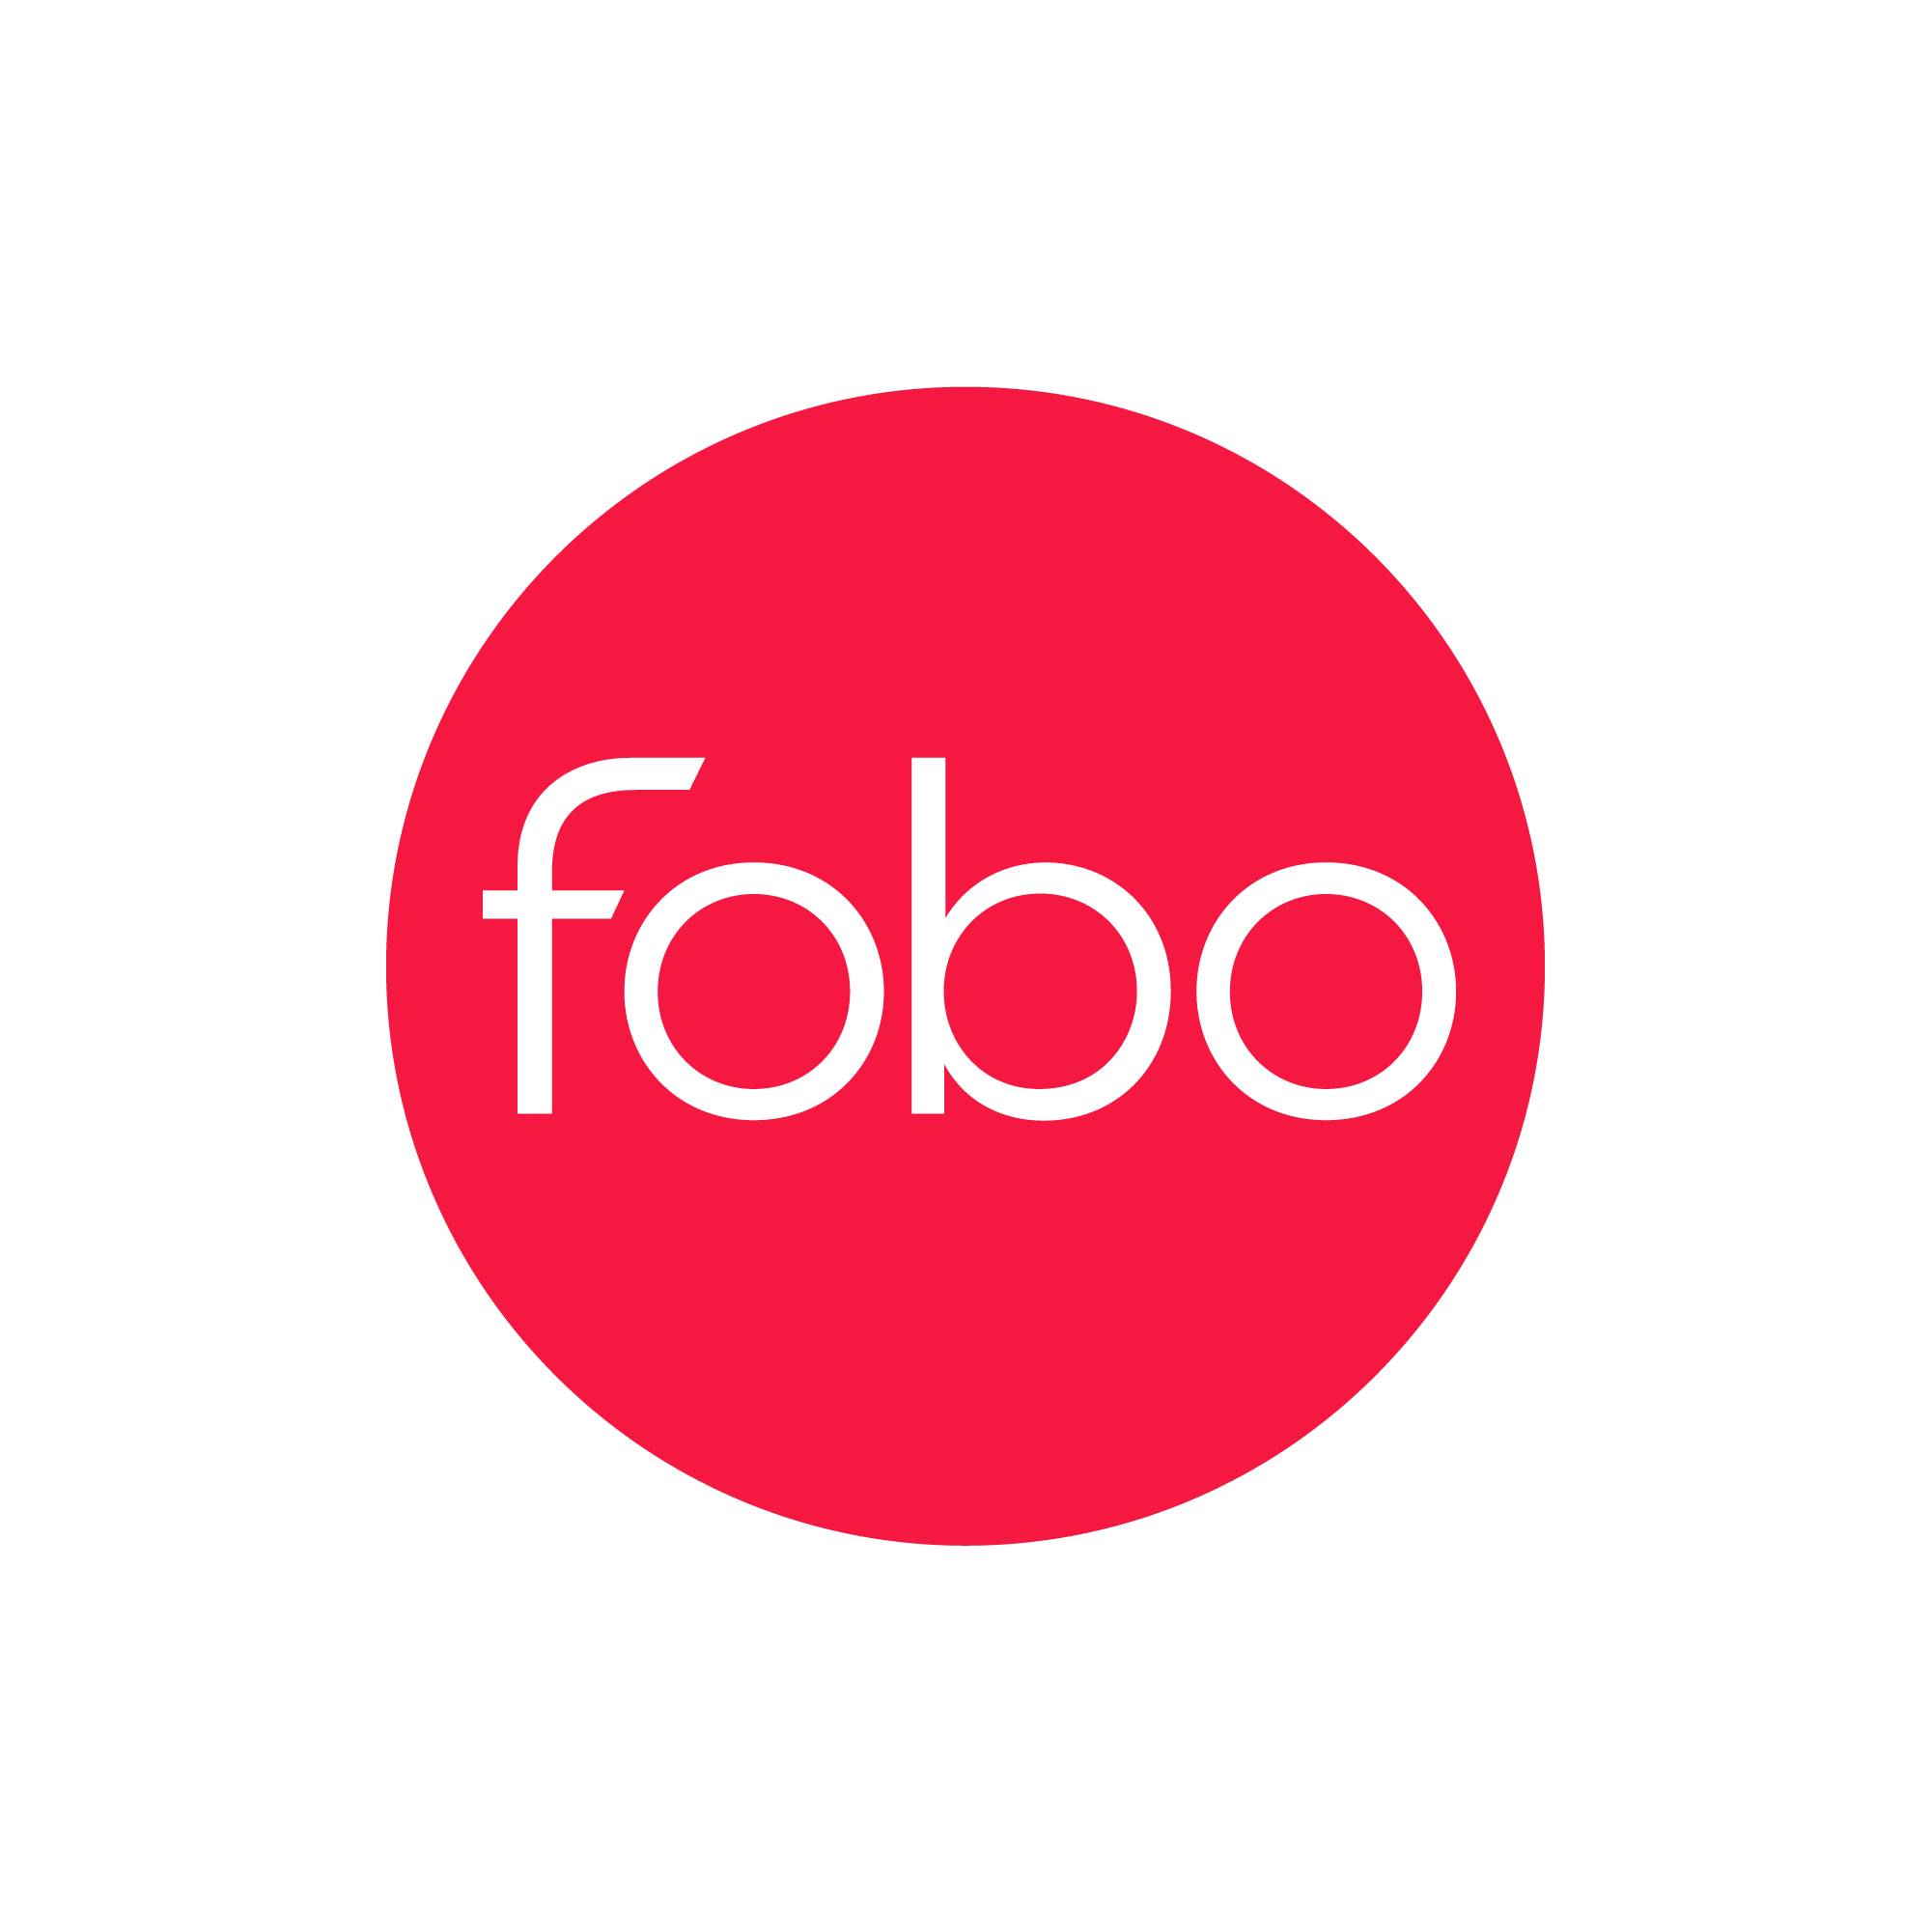 Fobo Badge RGB.png